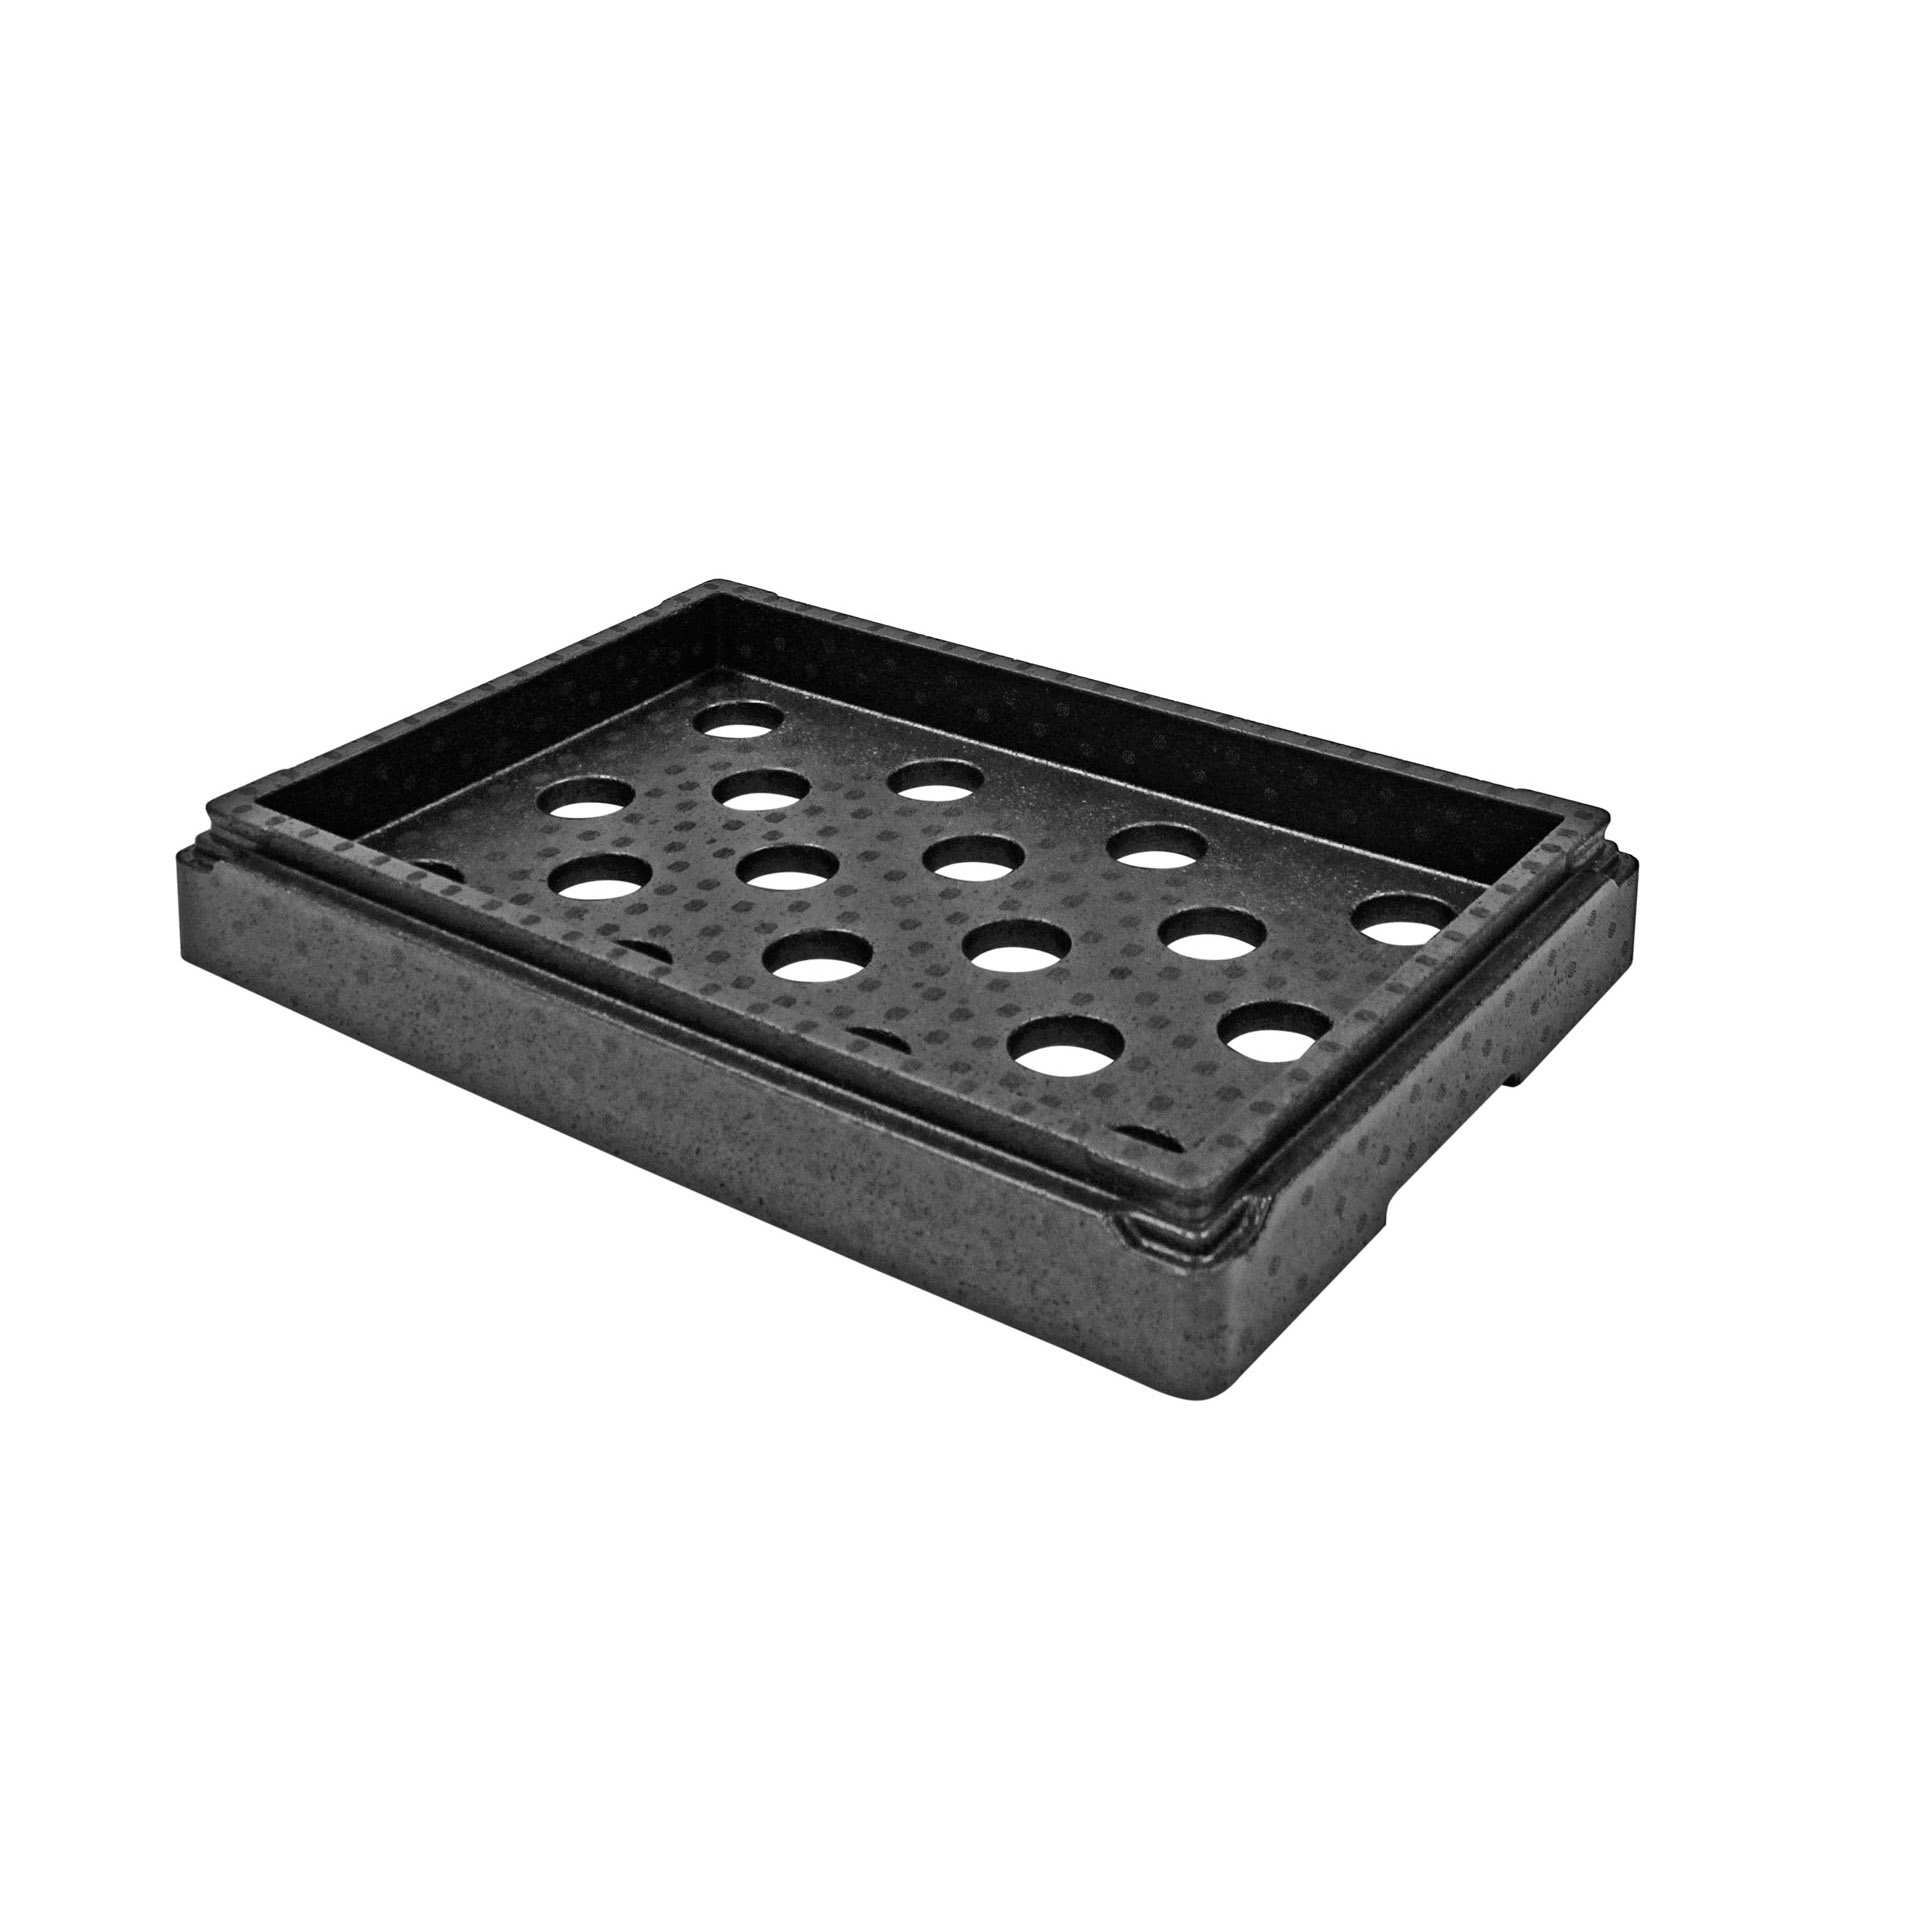 TOP-BOX - Aufsatz - Hot & Cold - Abm. 60,0 x 40,0 x 8,5 cm - GN 1/1 (530 x 325 mm) - EPP - 620910-C